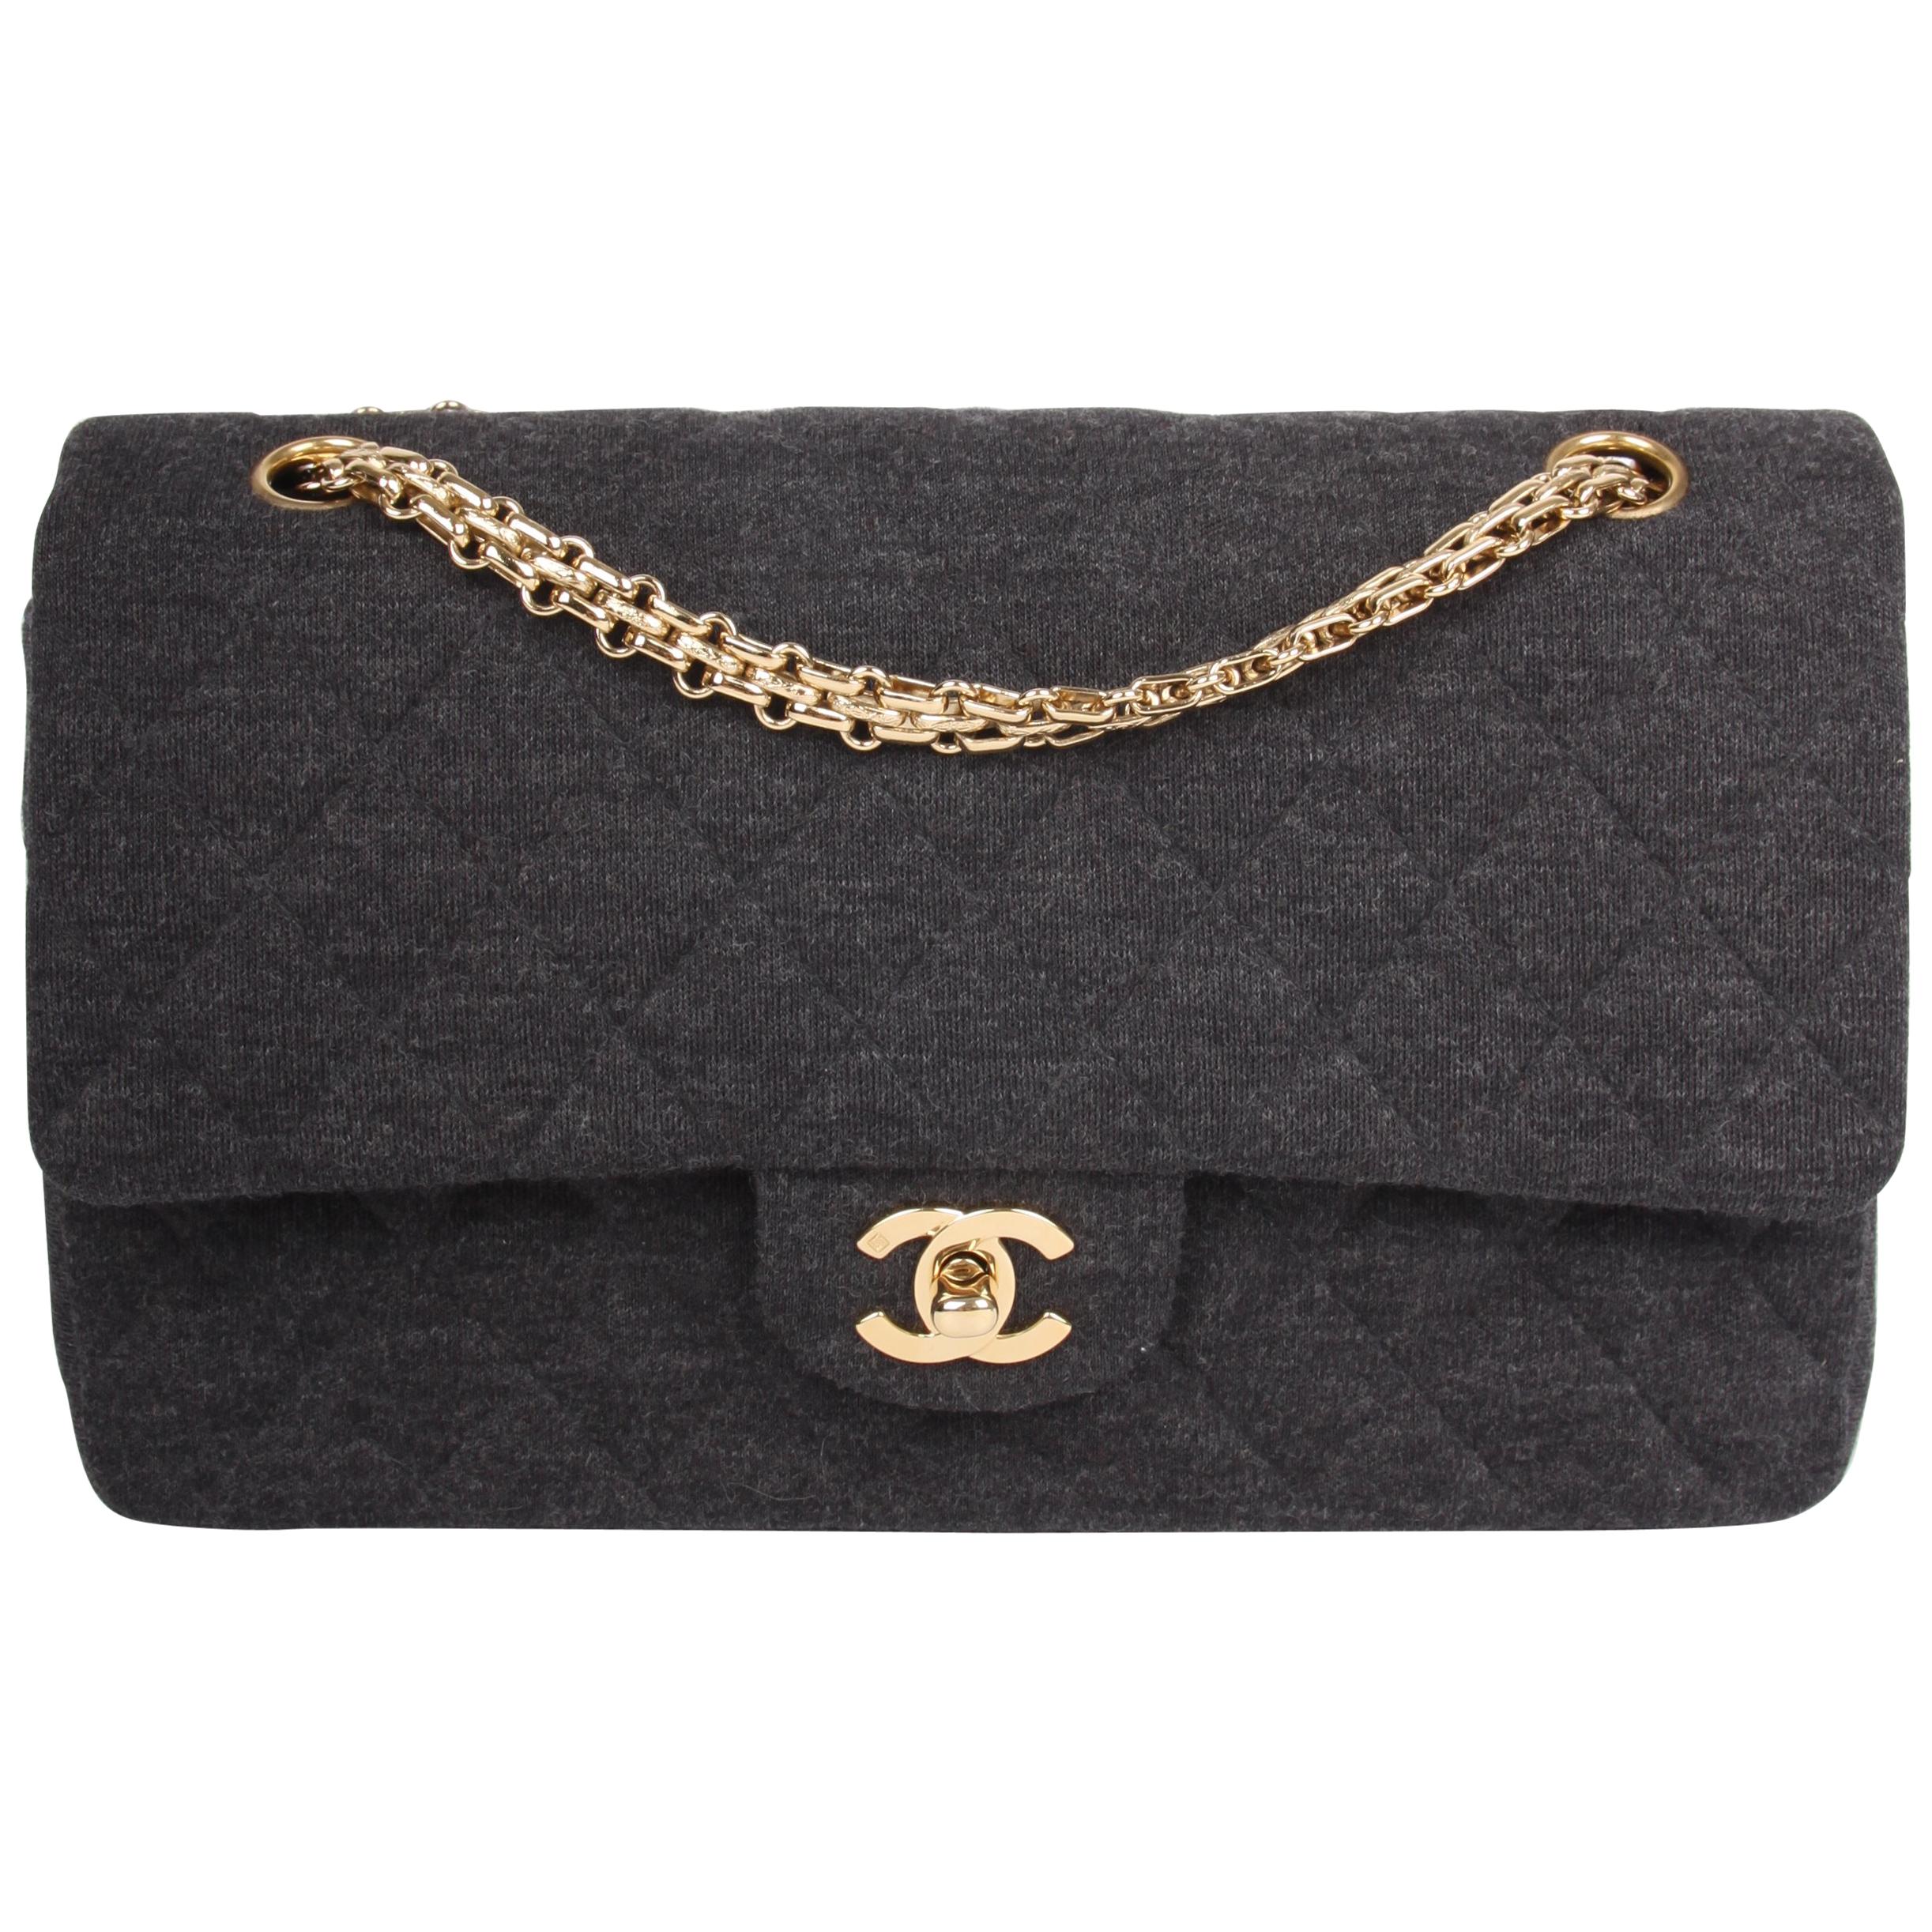 Chanel 2.55 Reissue Medium Double Flap Bag Jersey - dark grey